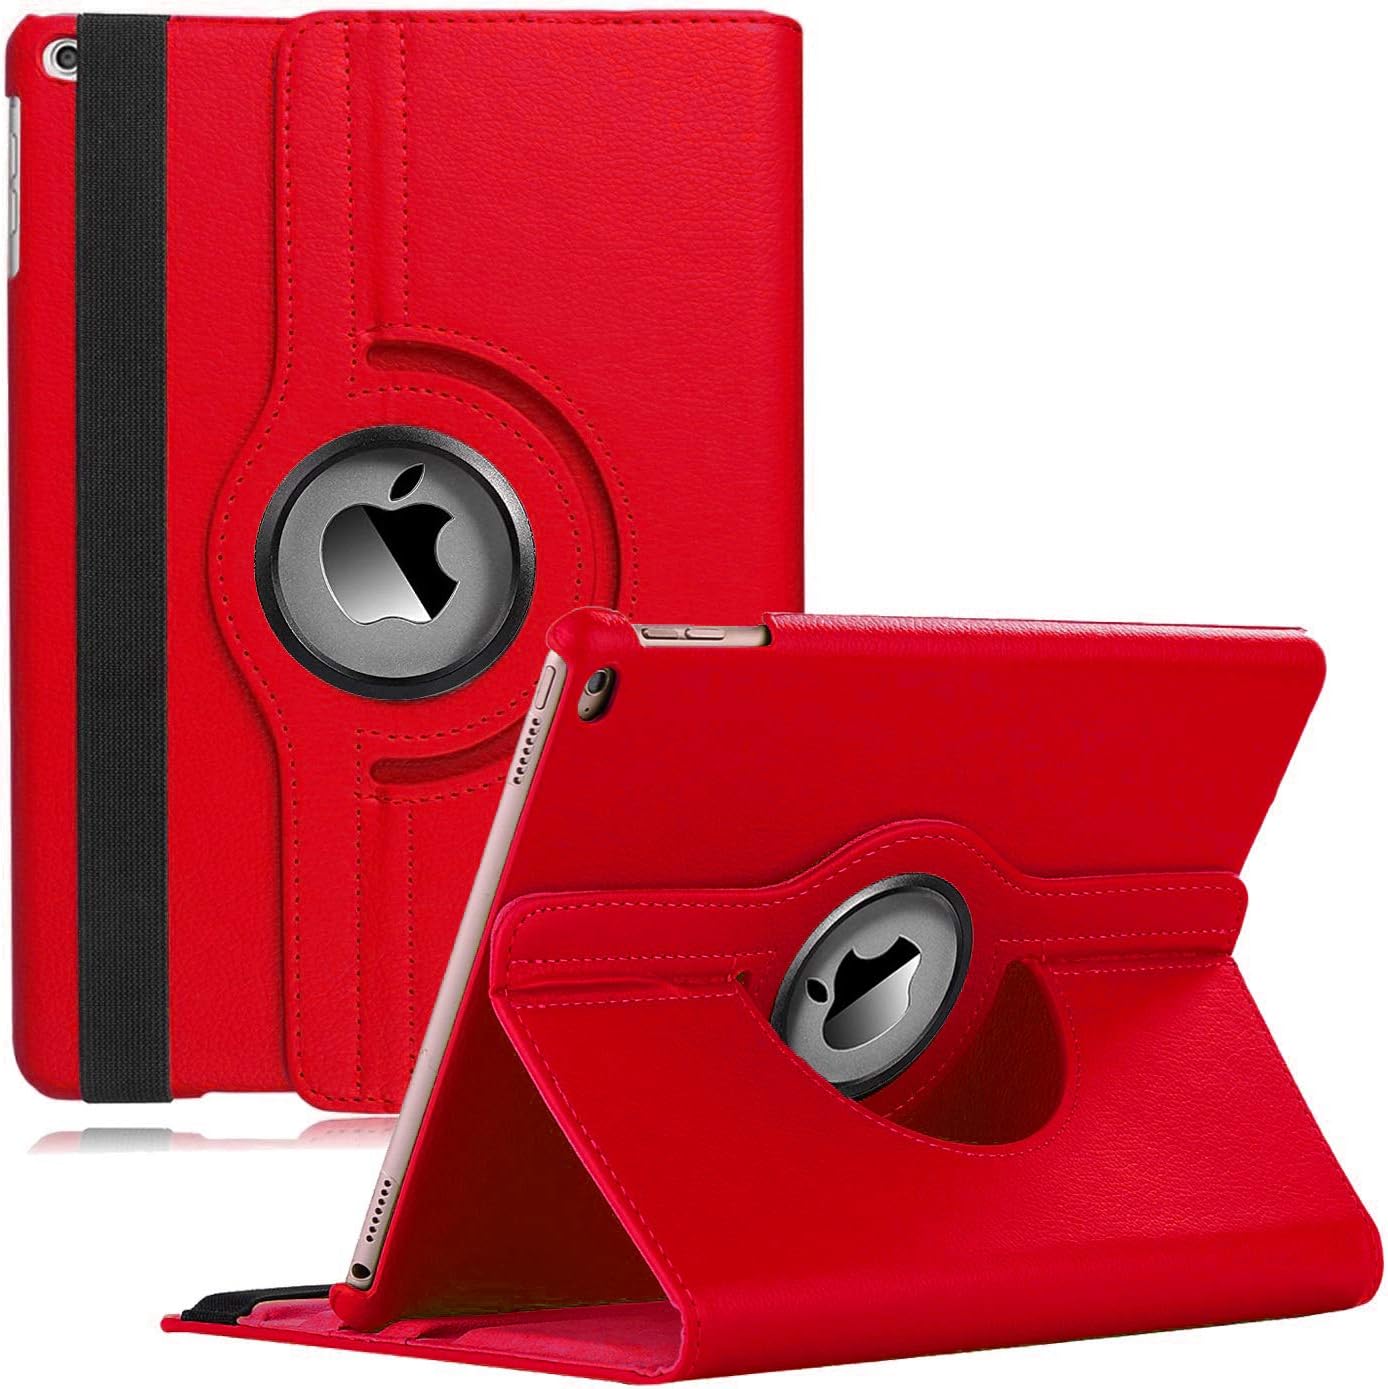 Kickstand Book Case for iPad 5, iPad 6, iPad Pro 9.7, iPad Air 1 & 2 (RED) *Free Shipping*